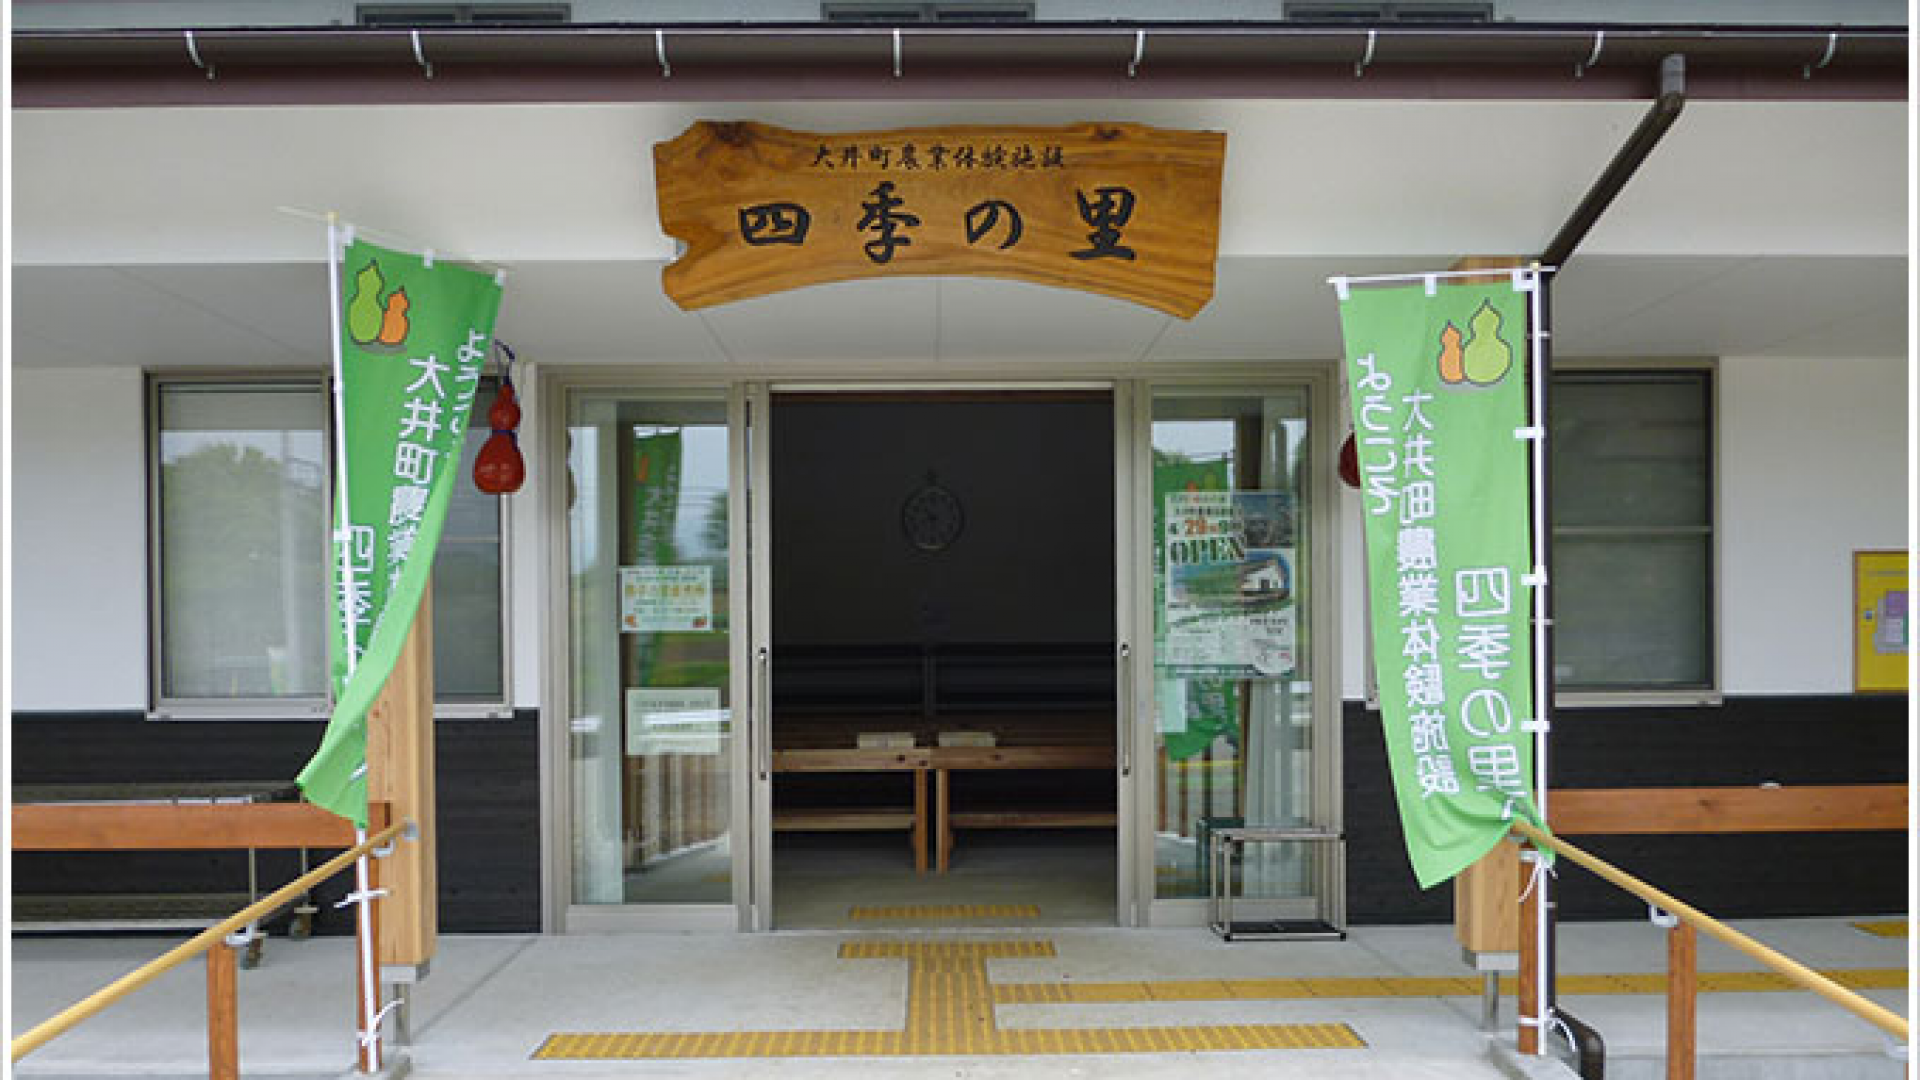 Expérience agricole Oi Installation Shiki no Sato